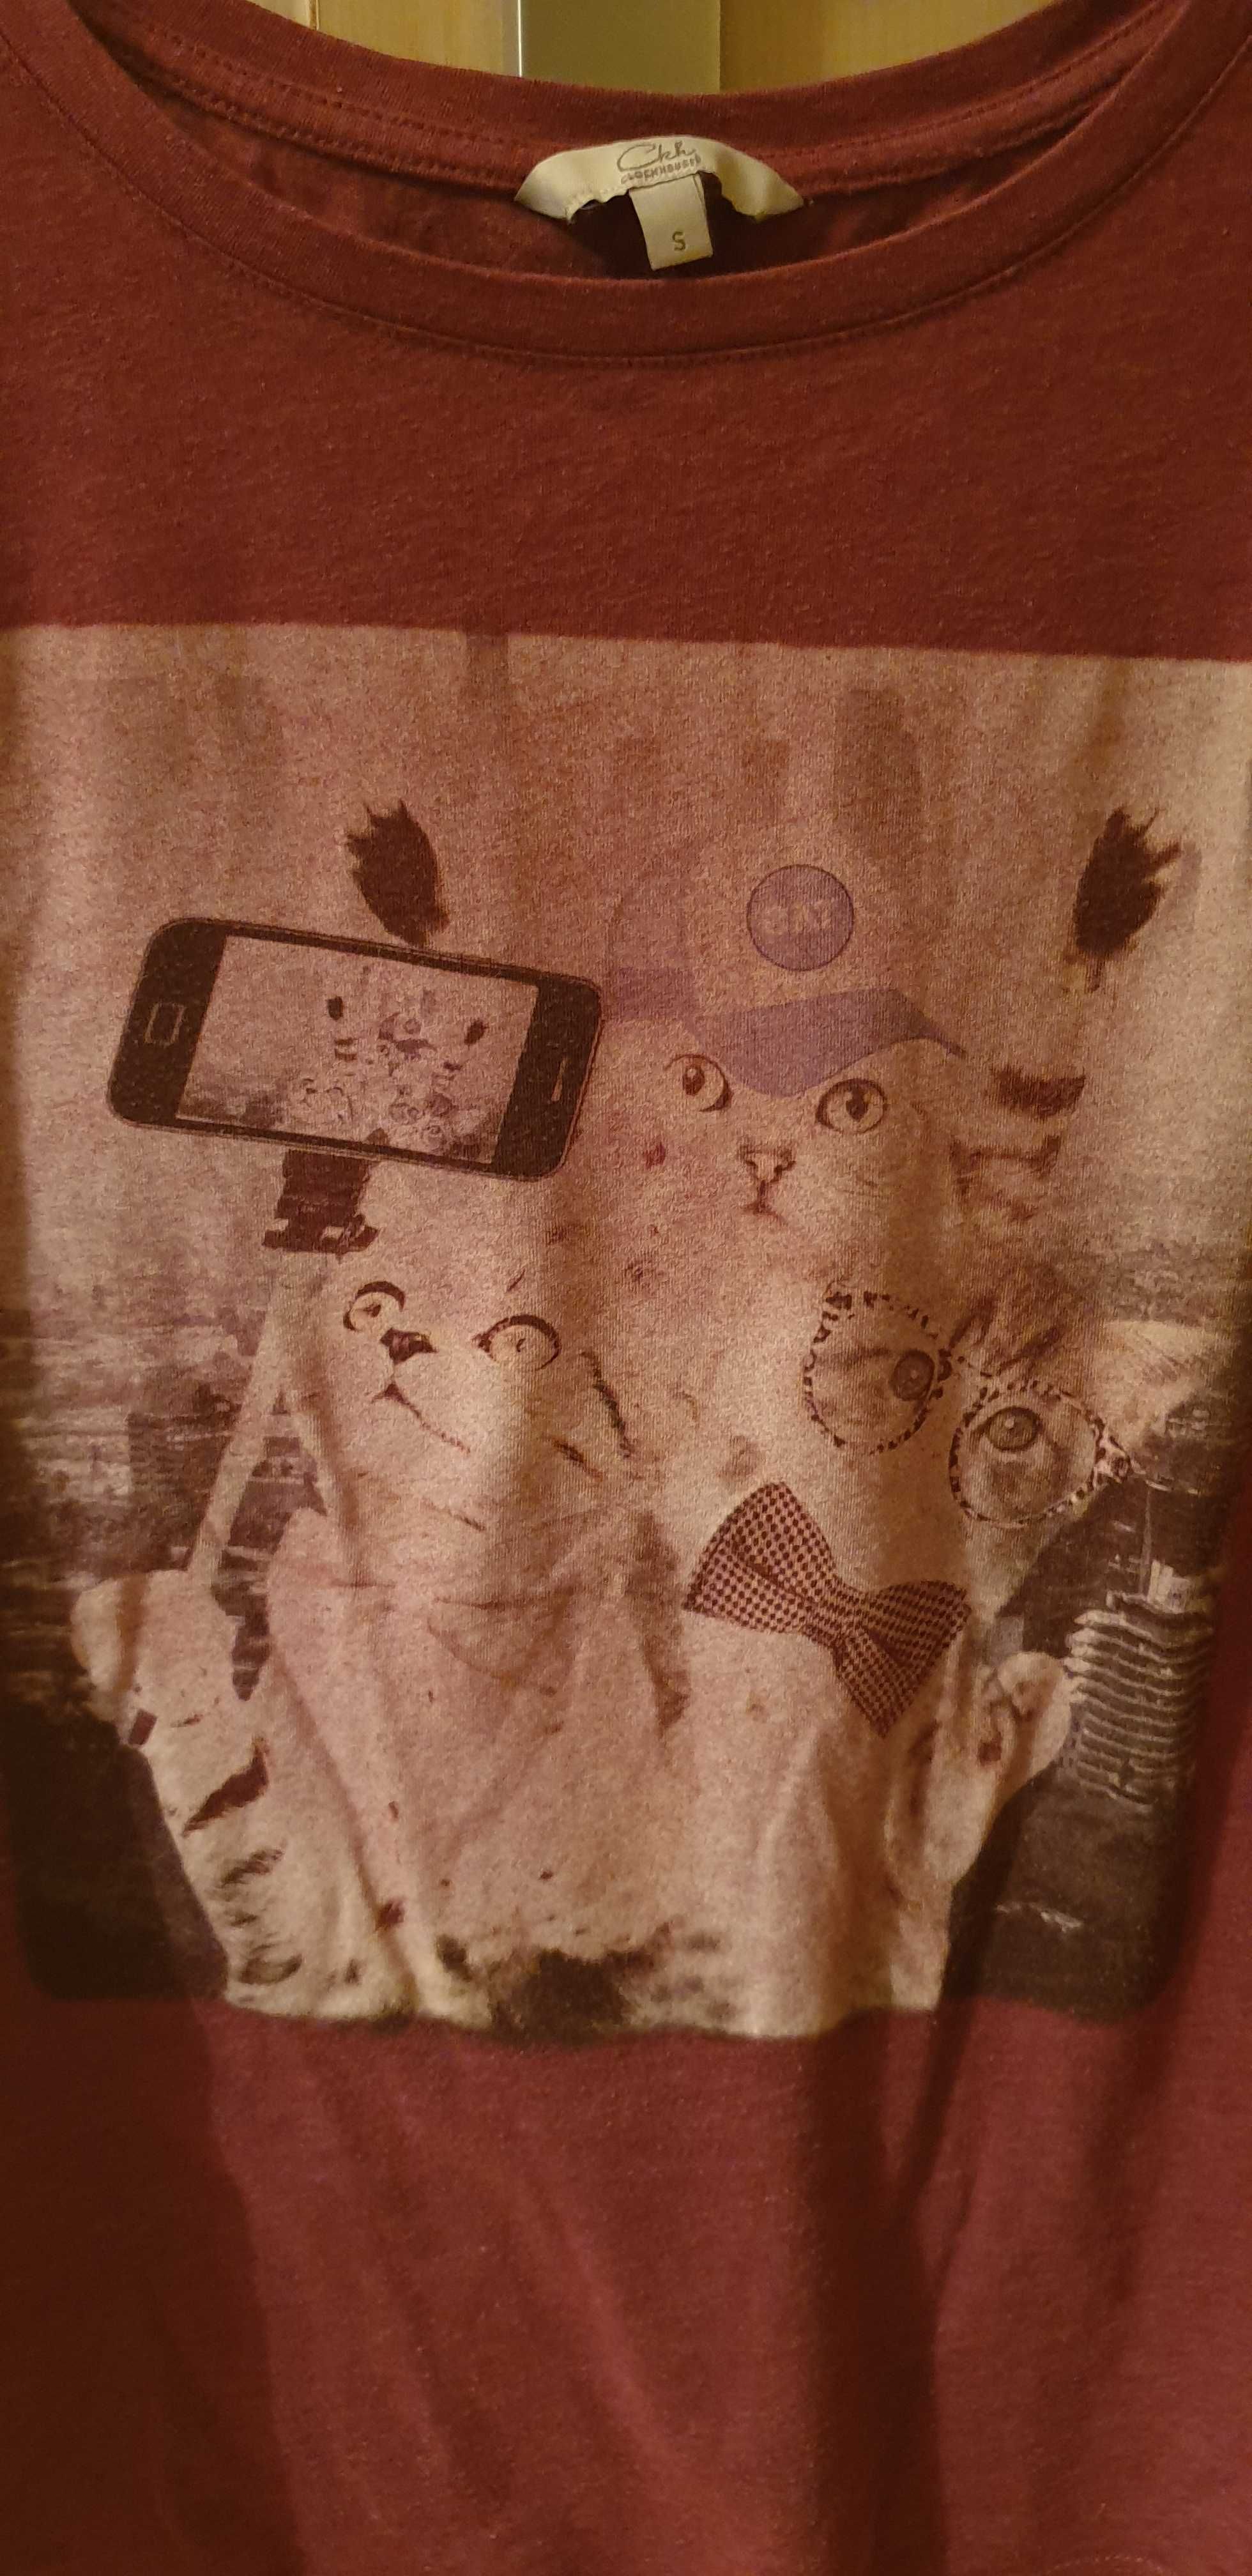 Bluzka C&A s koty kotki